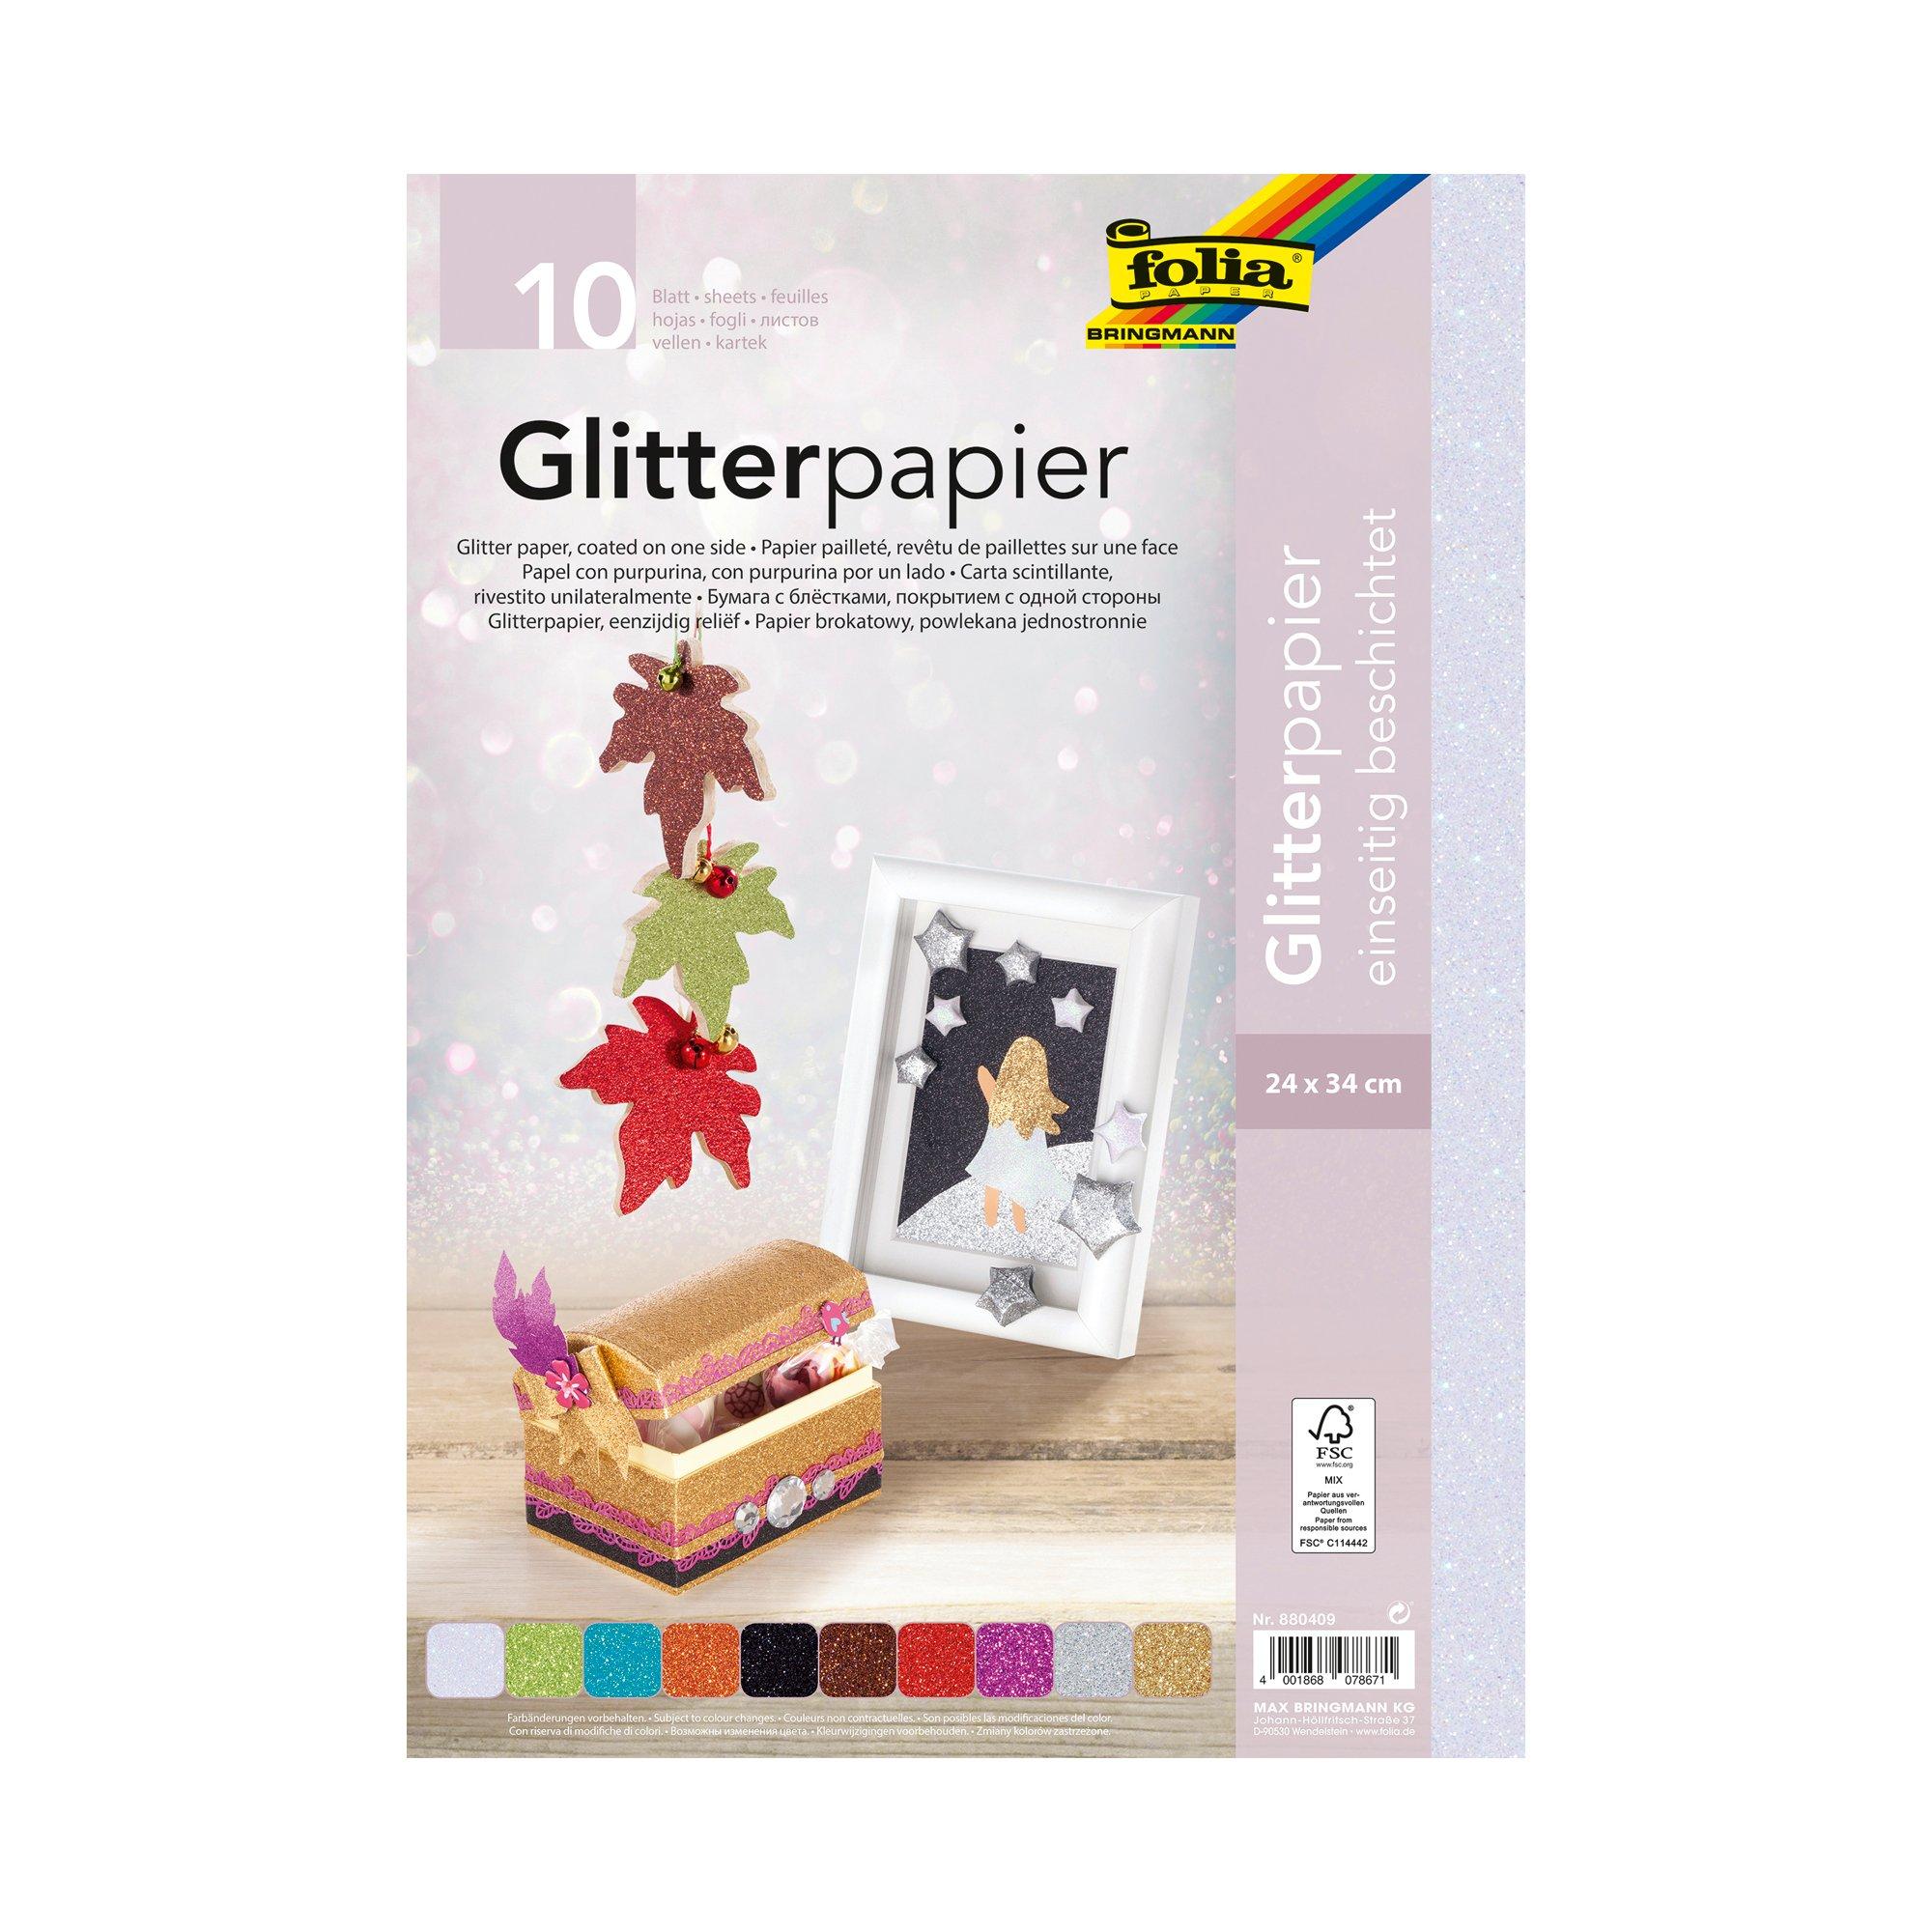 Image of Folia Glitterpapierblock - 24 x 34 cm